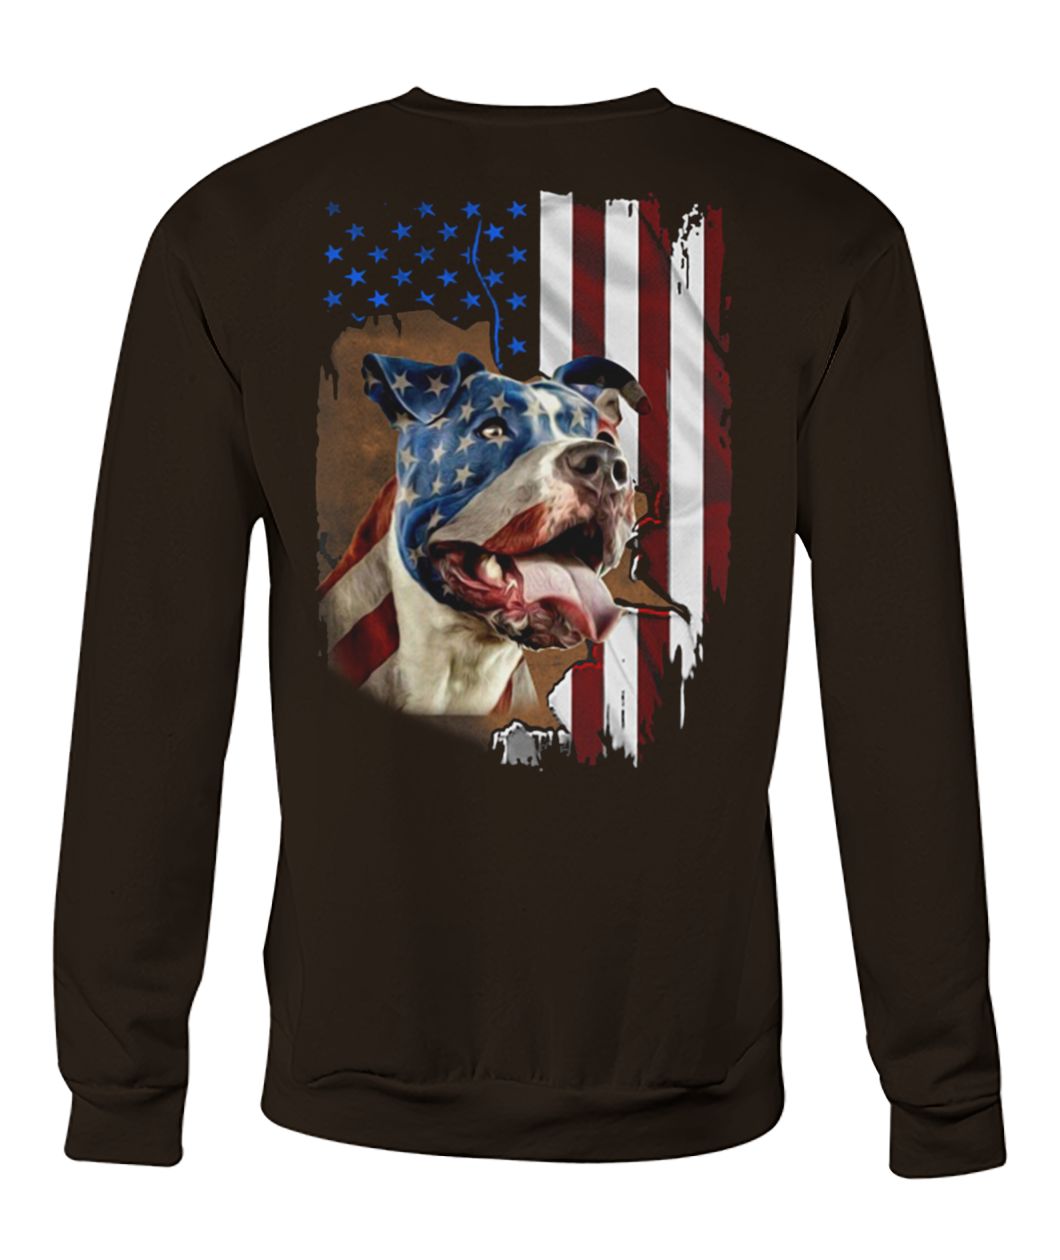 Independence day american flag pitbull crew neck sweatshirt